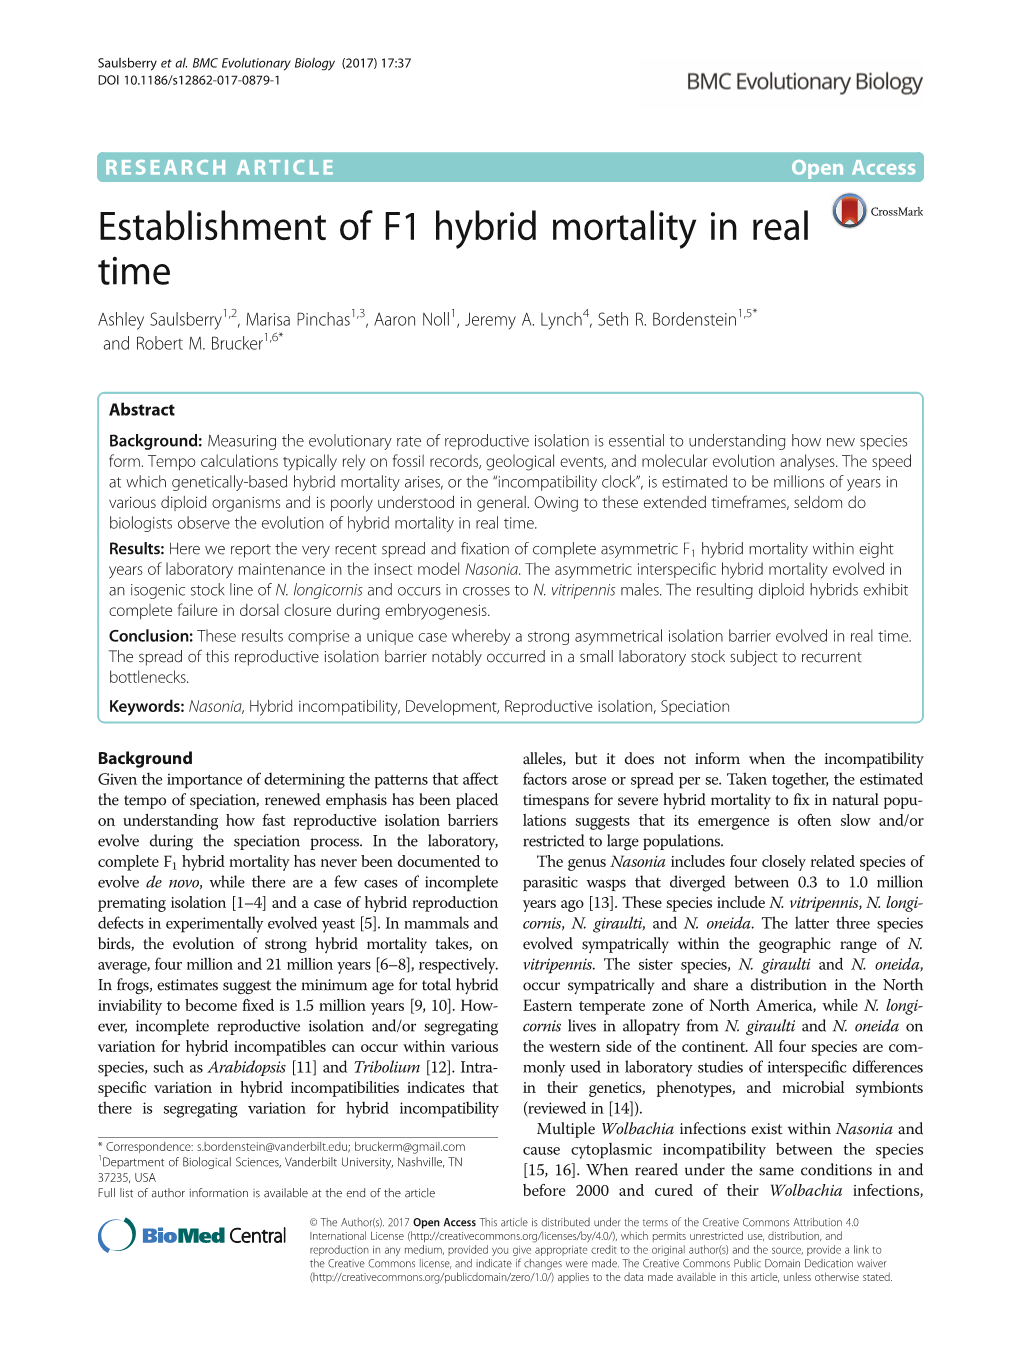 Establishment of F1 Hybrid Mortality in Real Time Ashley Saulsberry1,2, Marisa Pinchas1,3, Aaron Noll1, Jeremy A